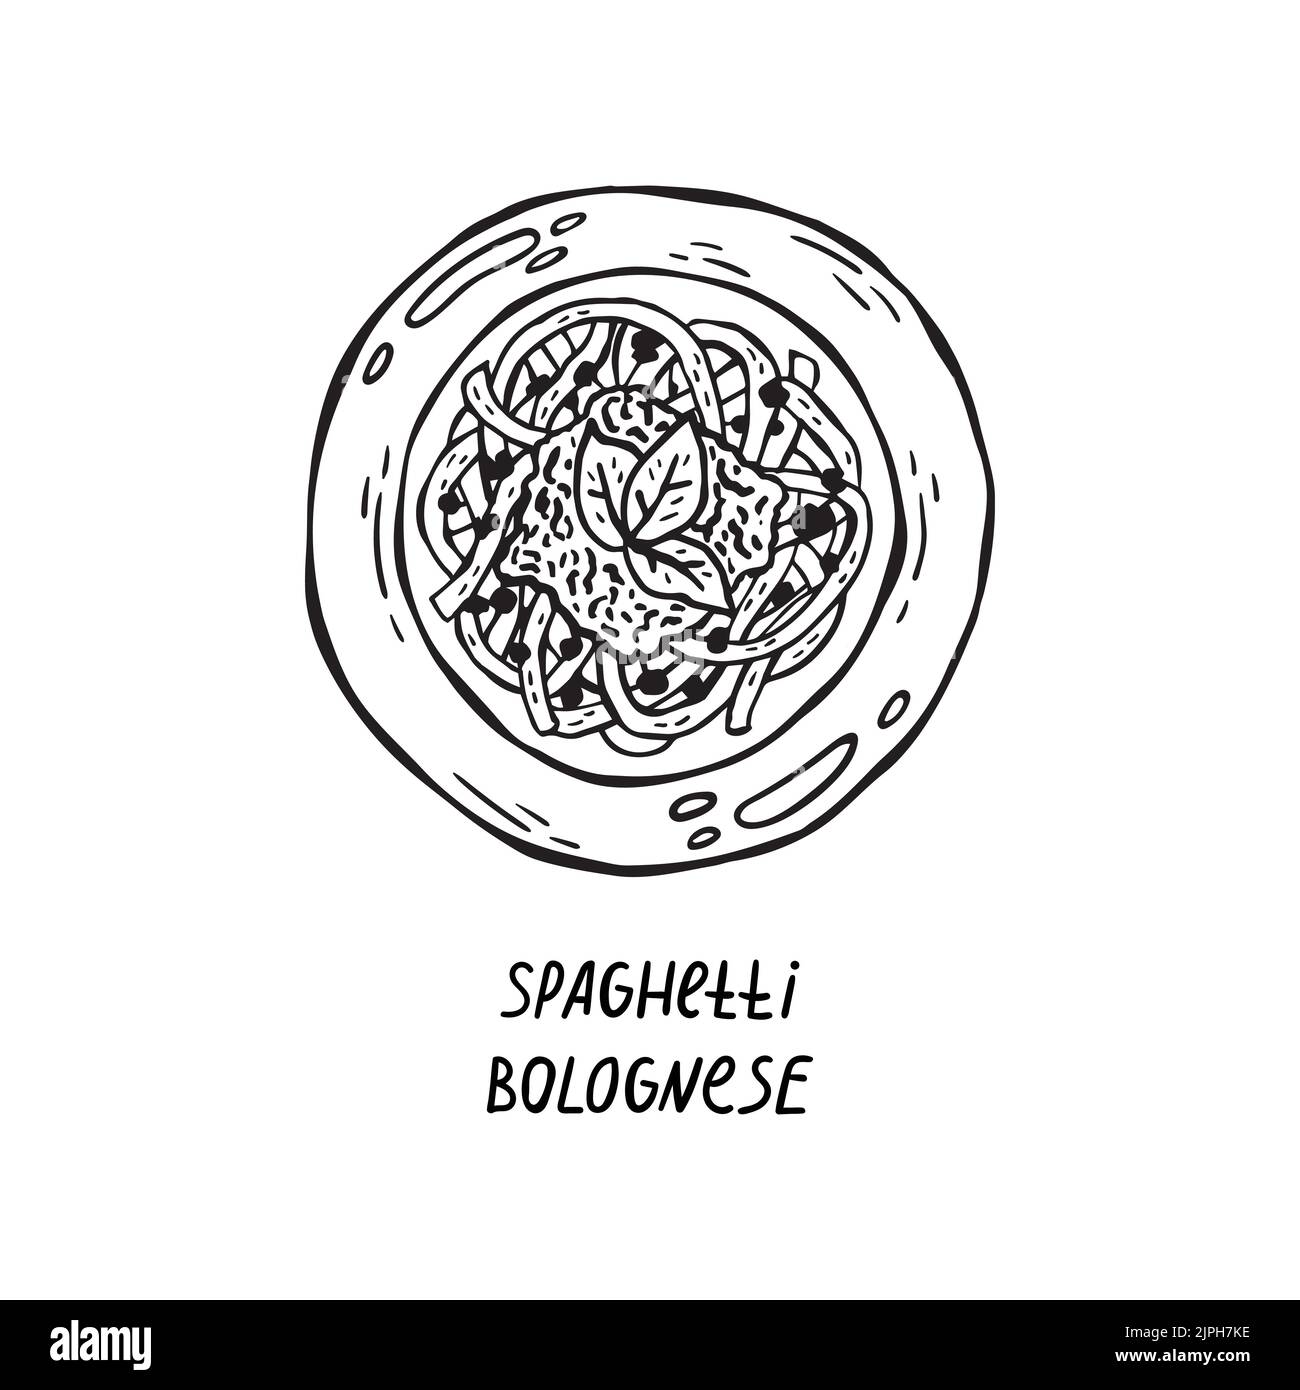 Vector hand-drawn illustration of Italian cuisine. Spaghetti bolognese Stock Vector